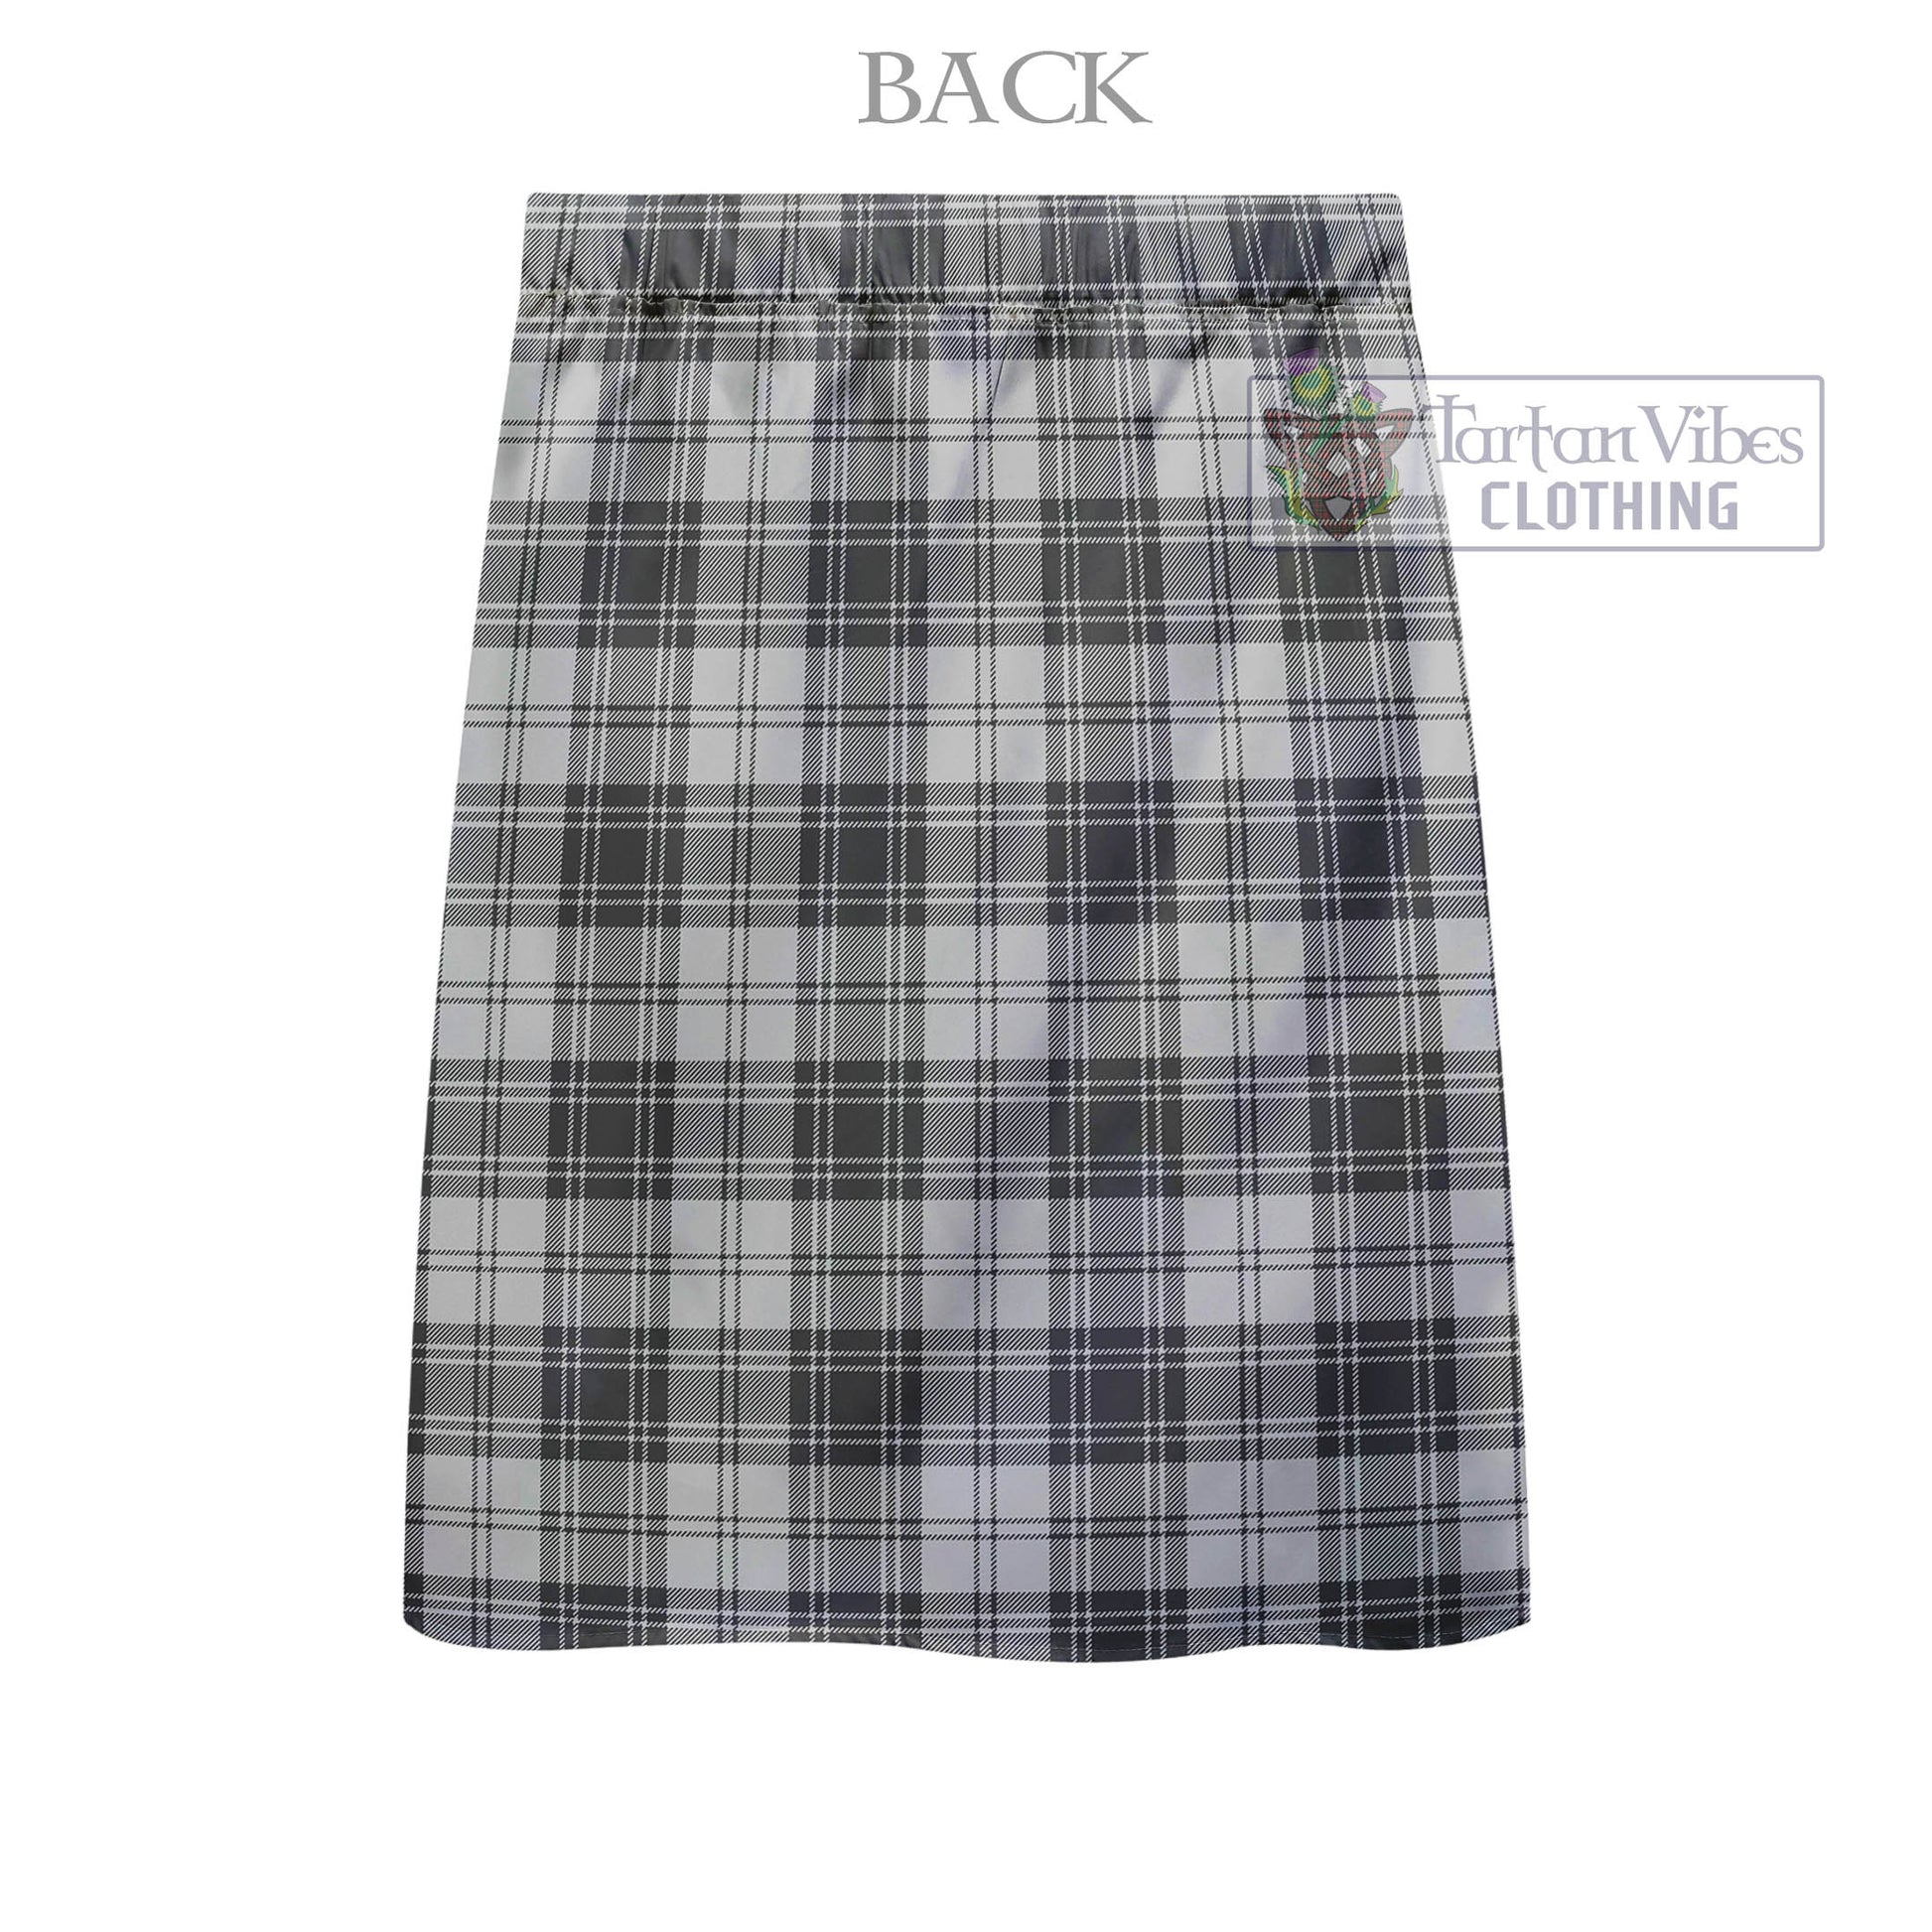 Tartan Vibes Clothing Glen Tartan Men's Pleated Skirt - Fashion Casual Retro Scottish Style